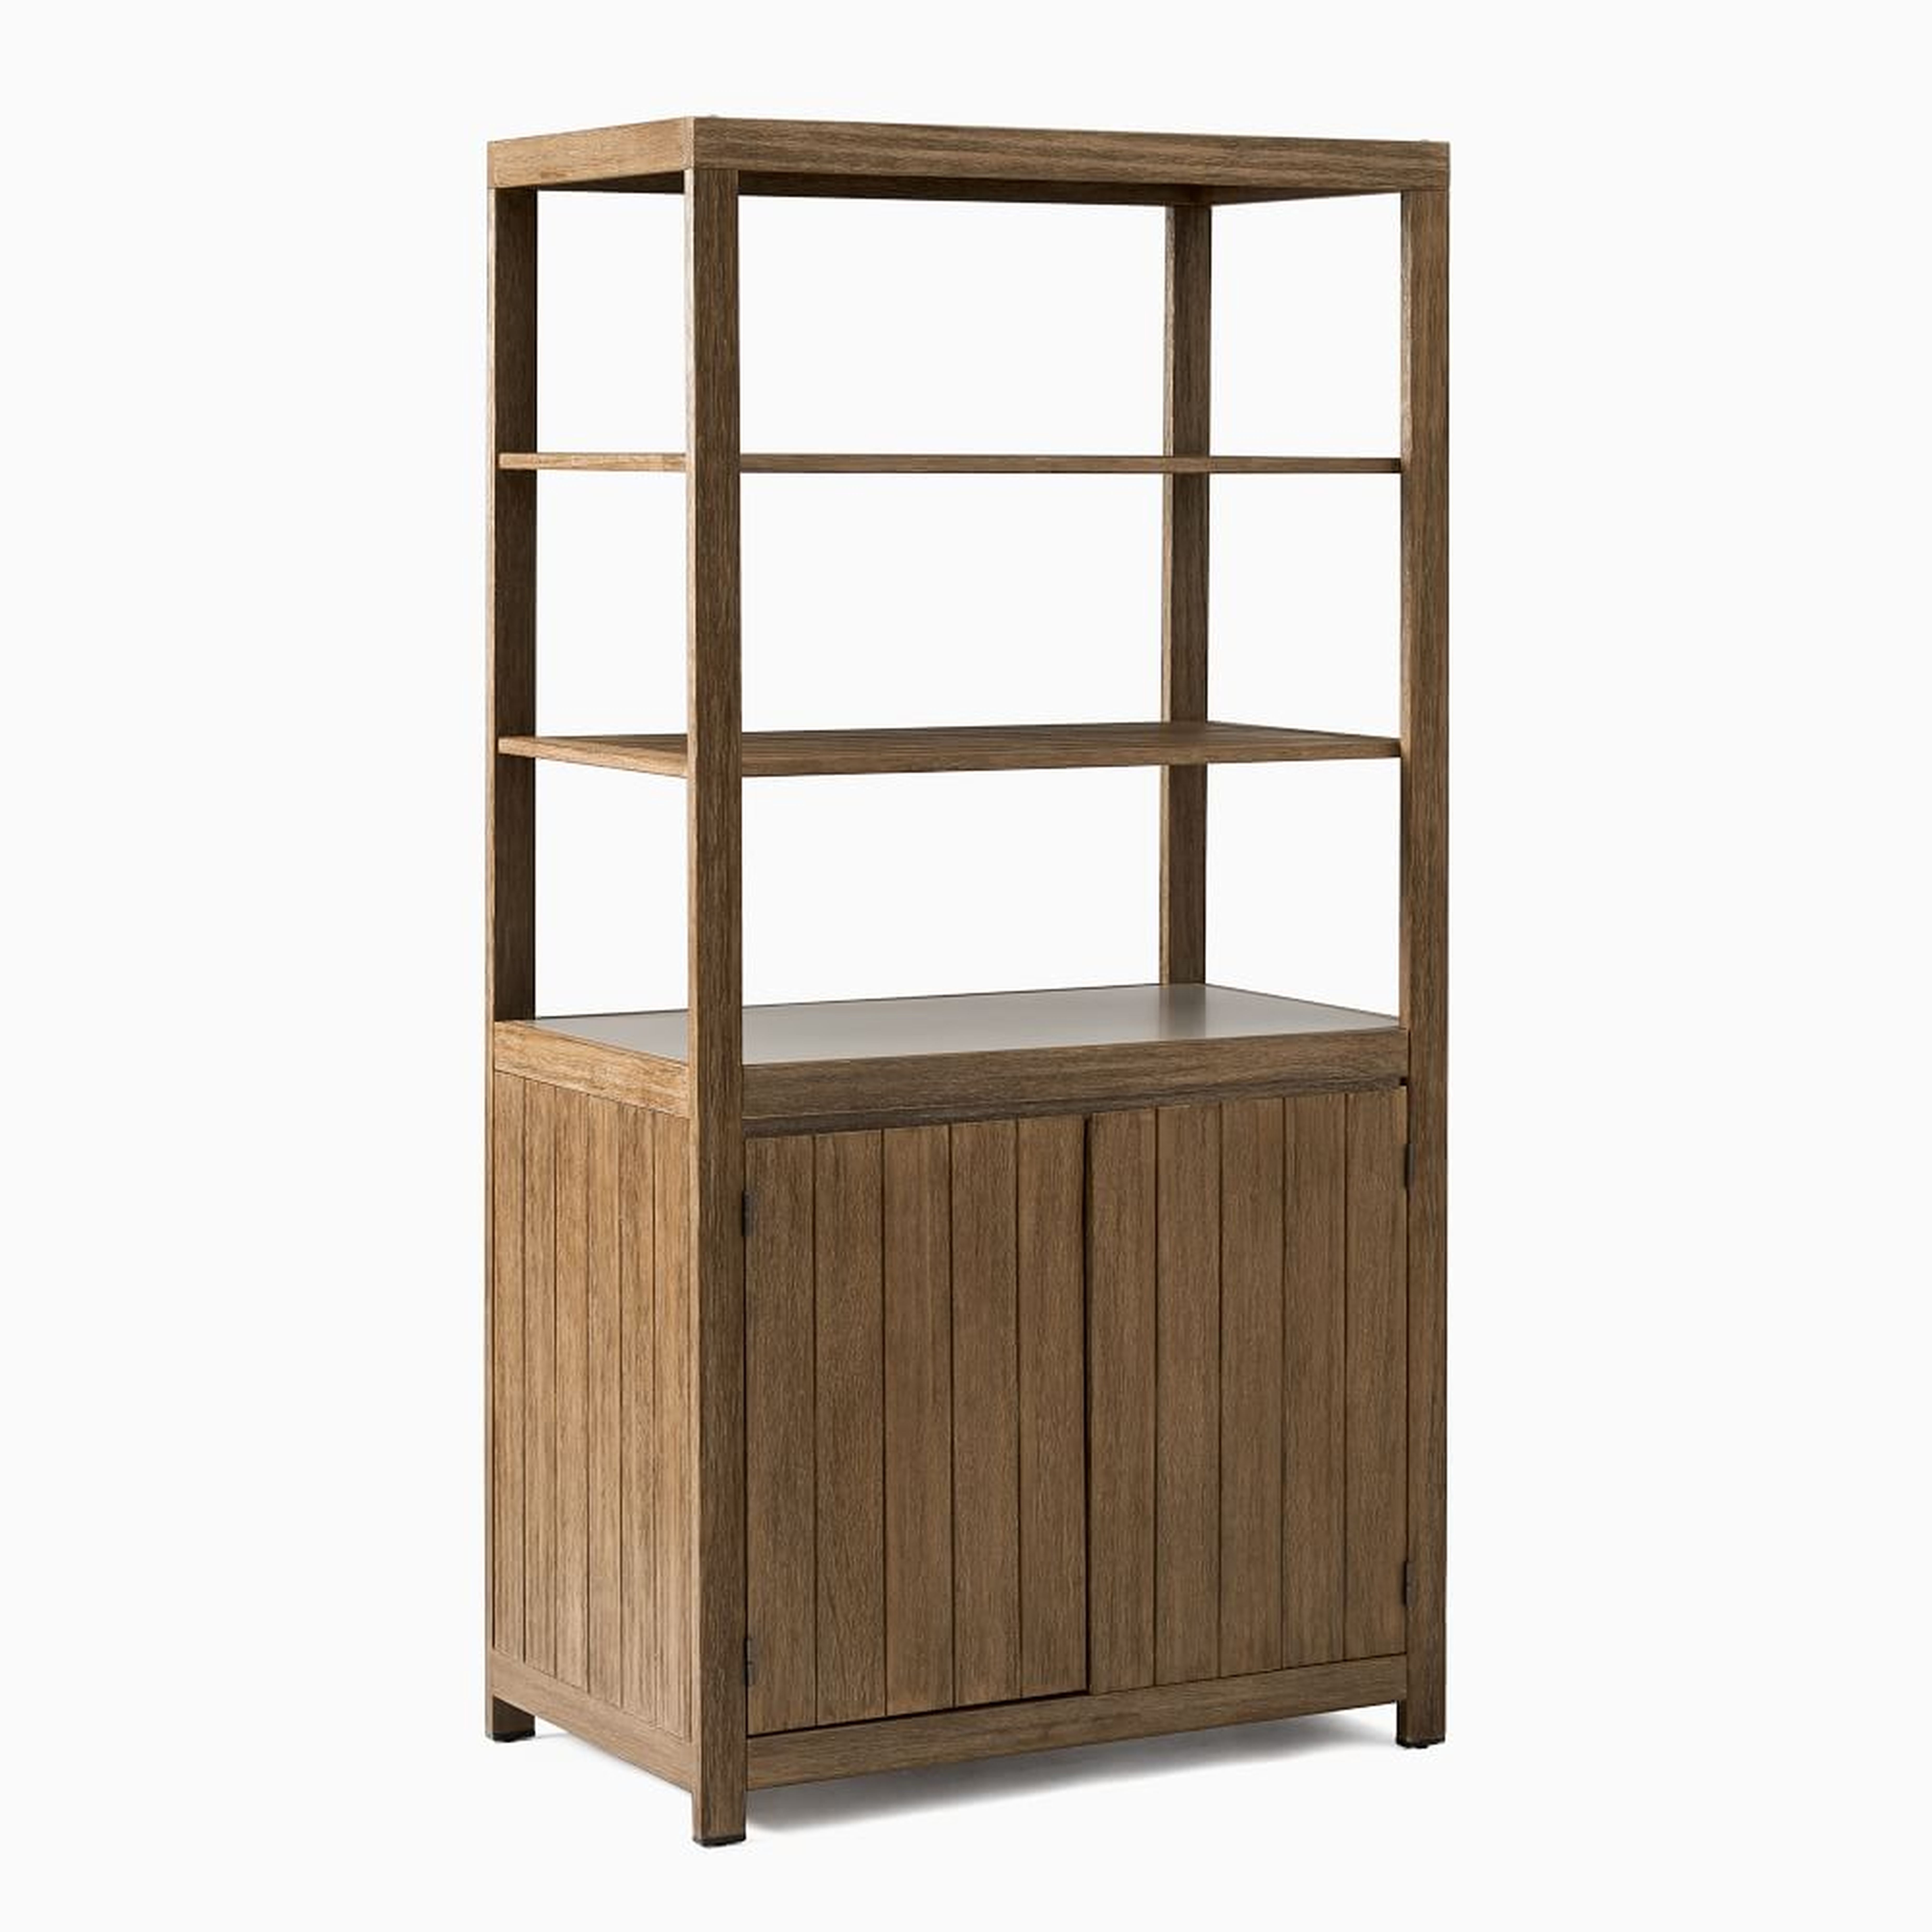 Portside Outdoor Wide Storage Cabinet w/ Shelves, Driftwood - West Elm